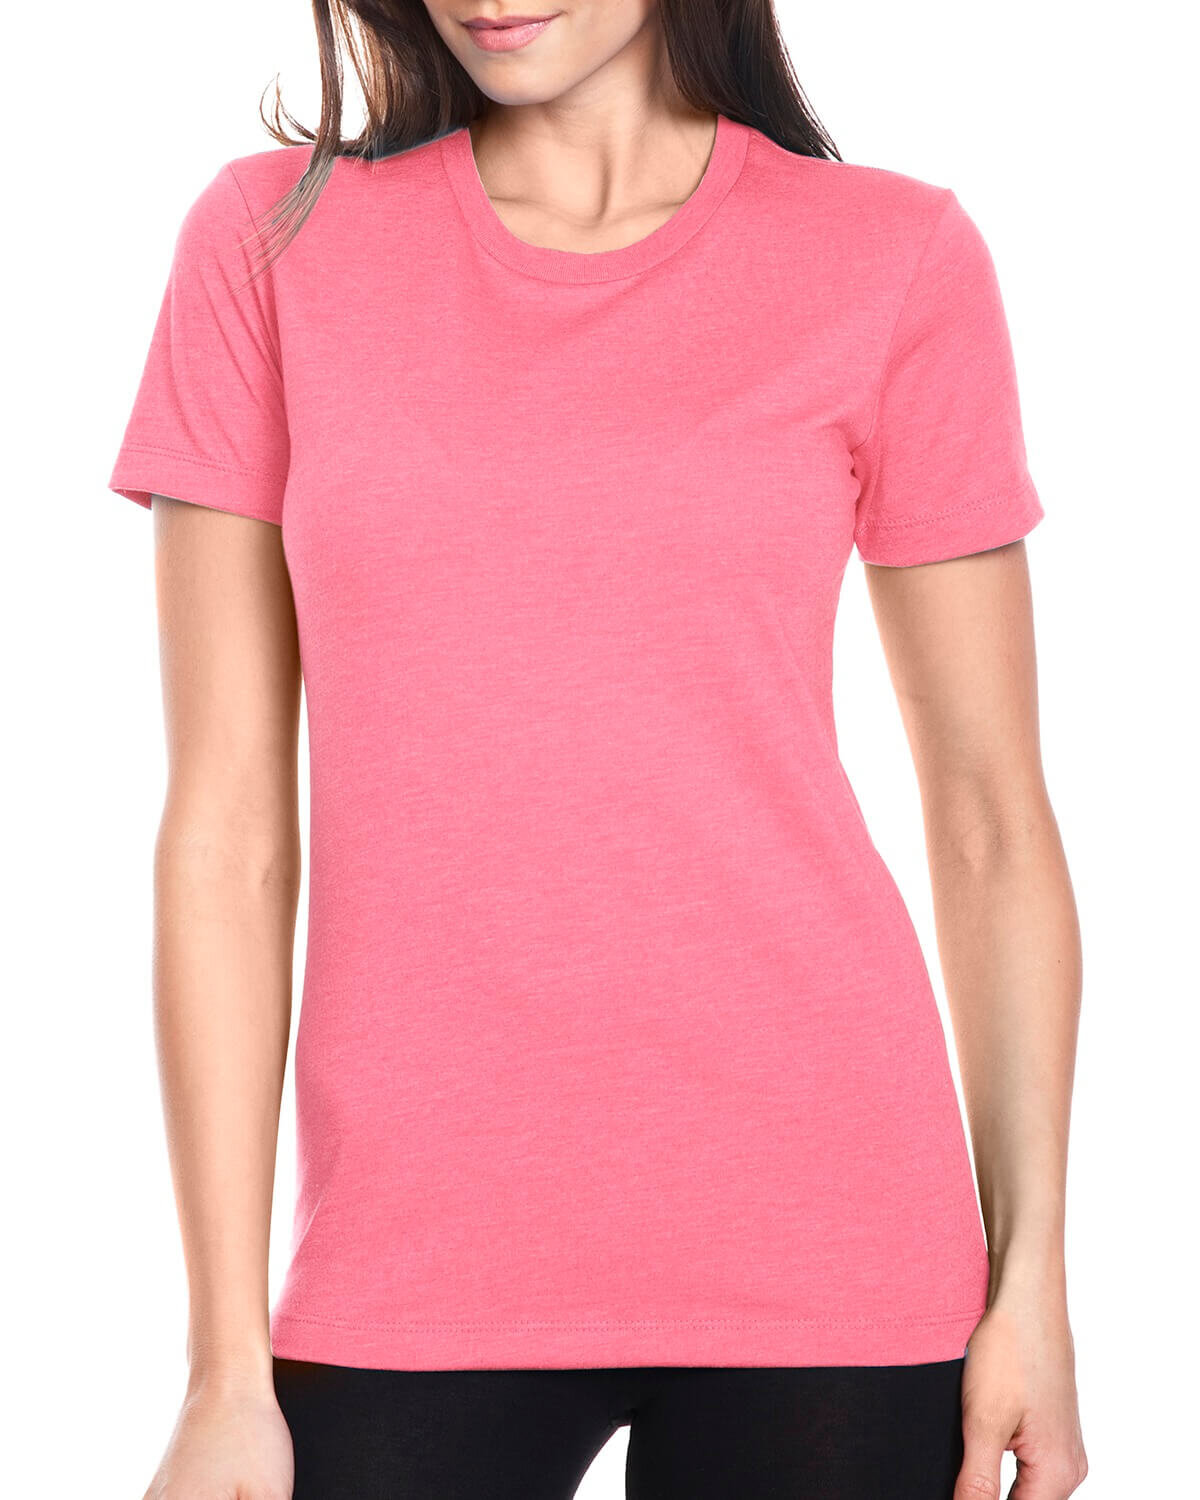 Next Level Ladies' CVC T-Shirt — Design Like Whoa